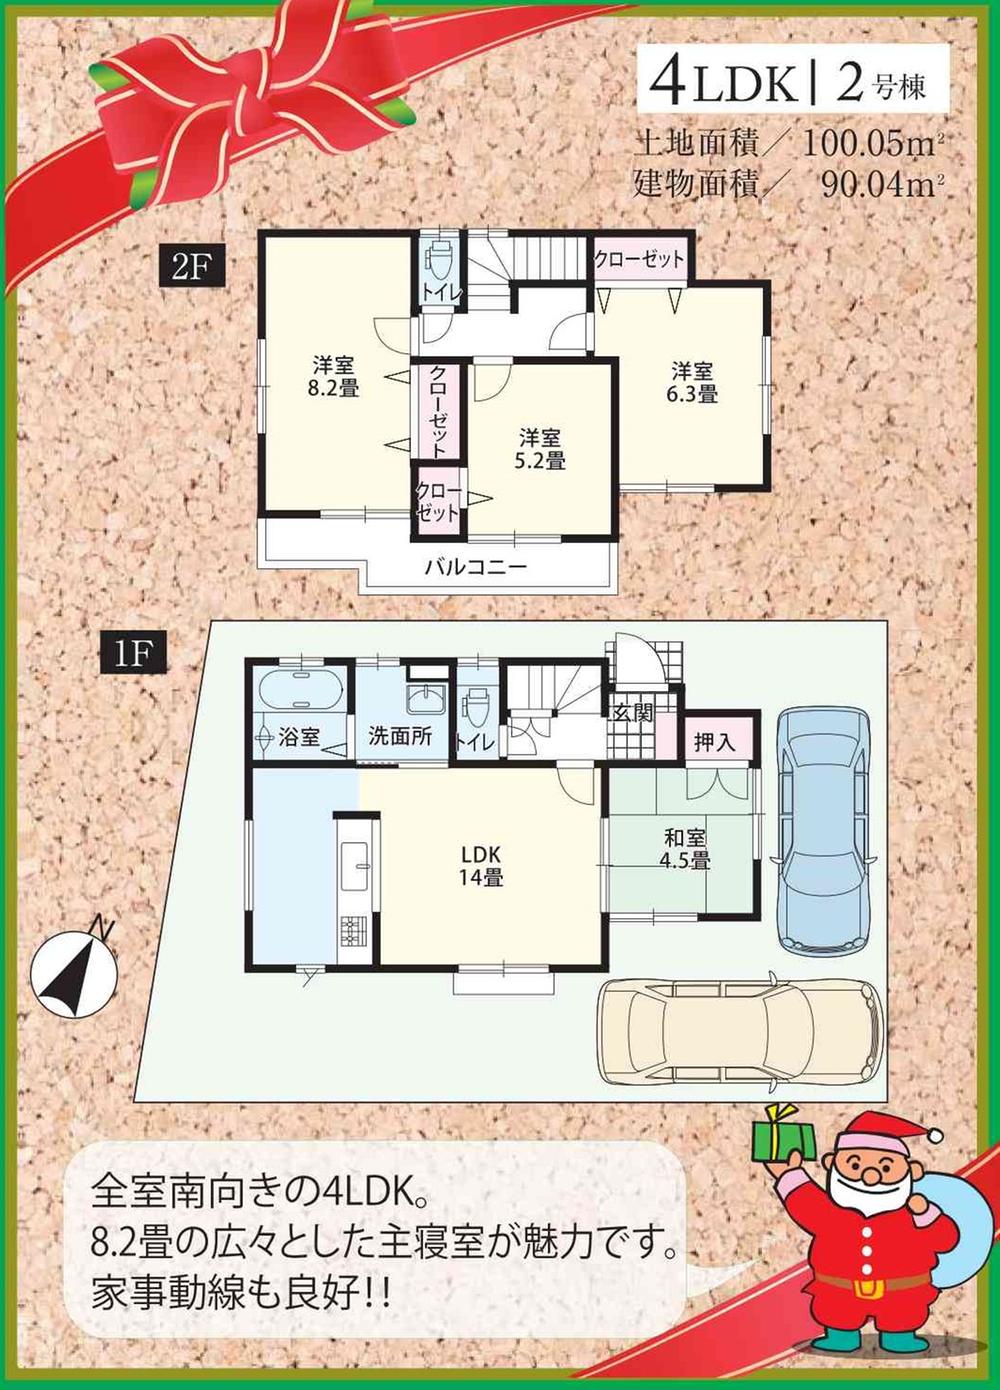 Floor plan. (Building 2), Price 30,800,000 yen, 4LDK, Land area 100.05 sq m , Building area 90.04 sq m